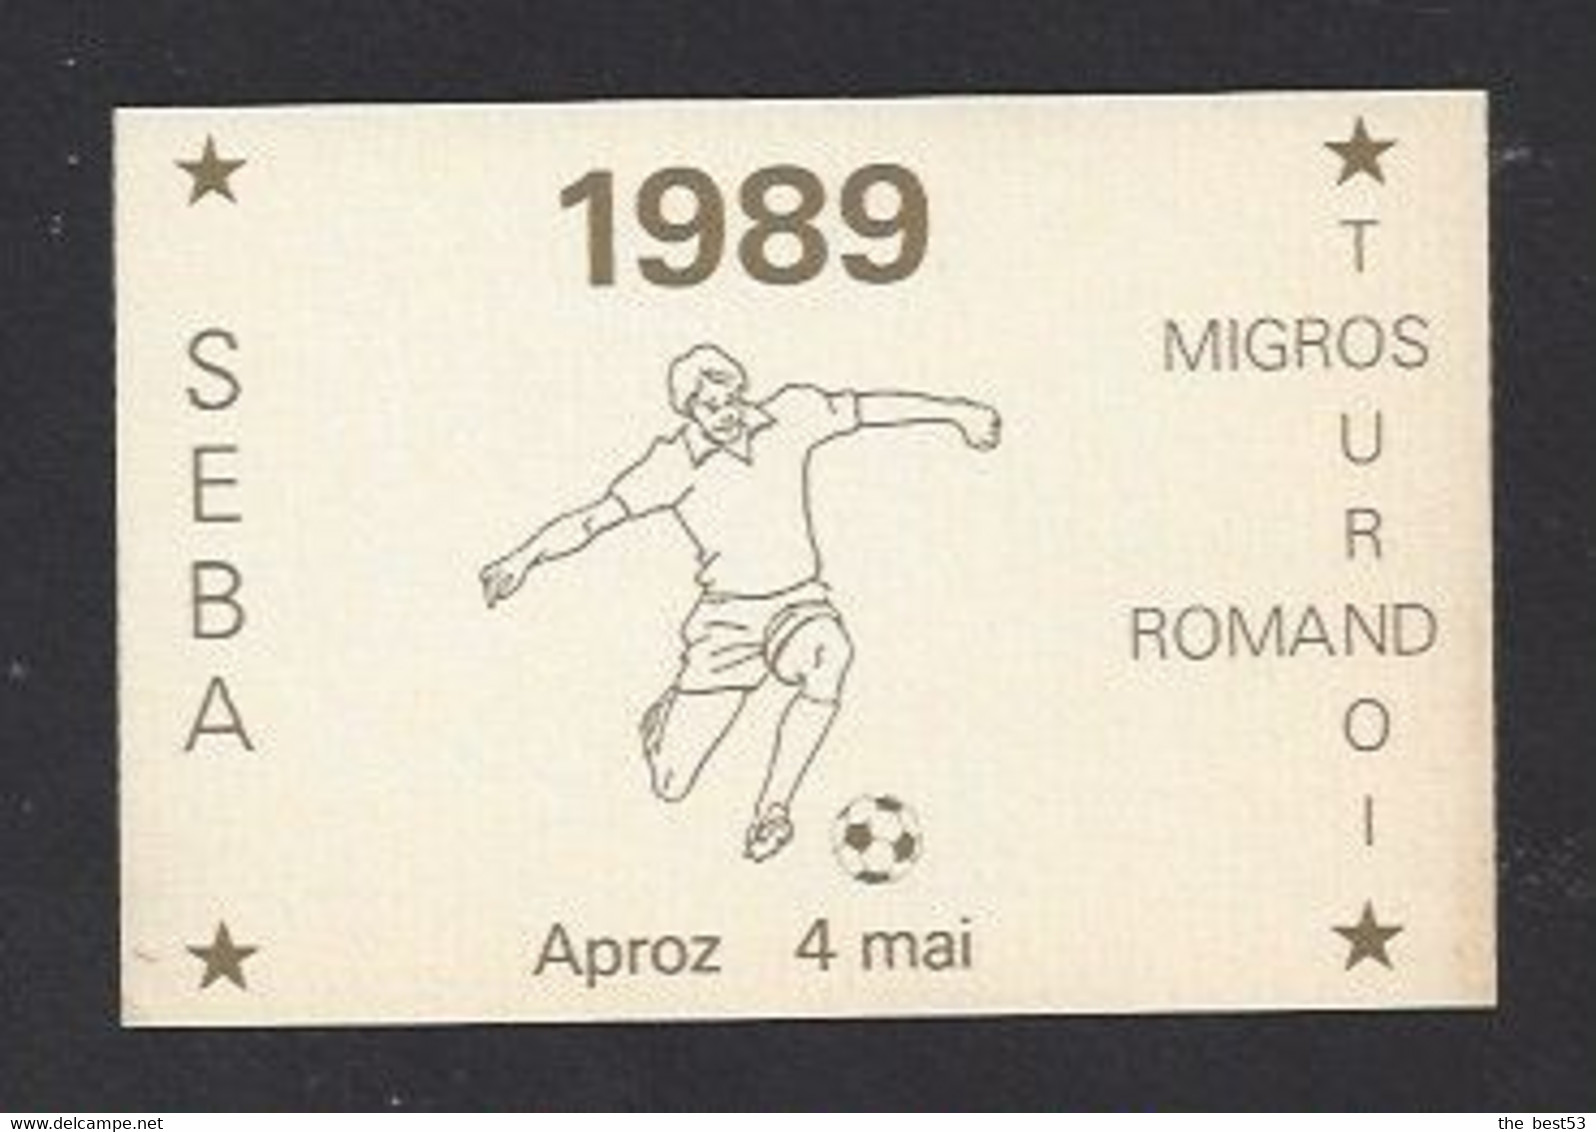 Etiquette De Vin -  Seba  -  Migros Tournois Romand 4 Mai 1989   (suisse) -  Thème Foot - Calcio